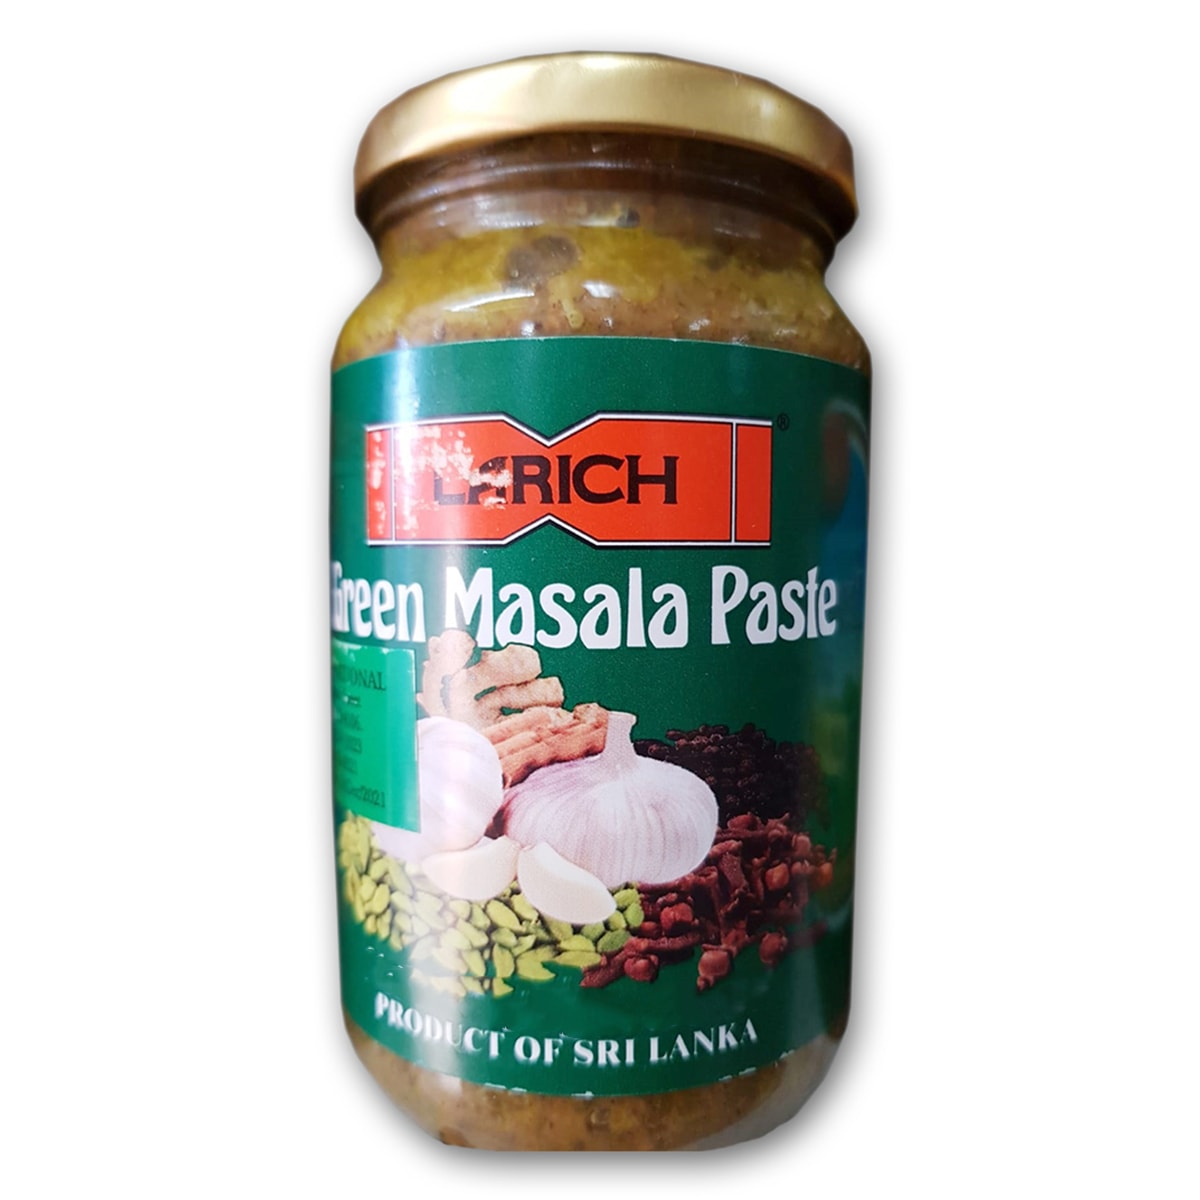 Buy Larich Green Masala Paste - 400 gm